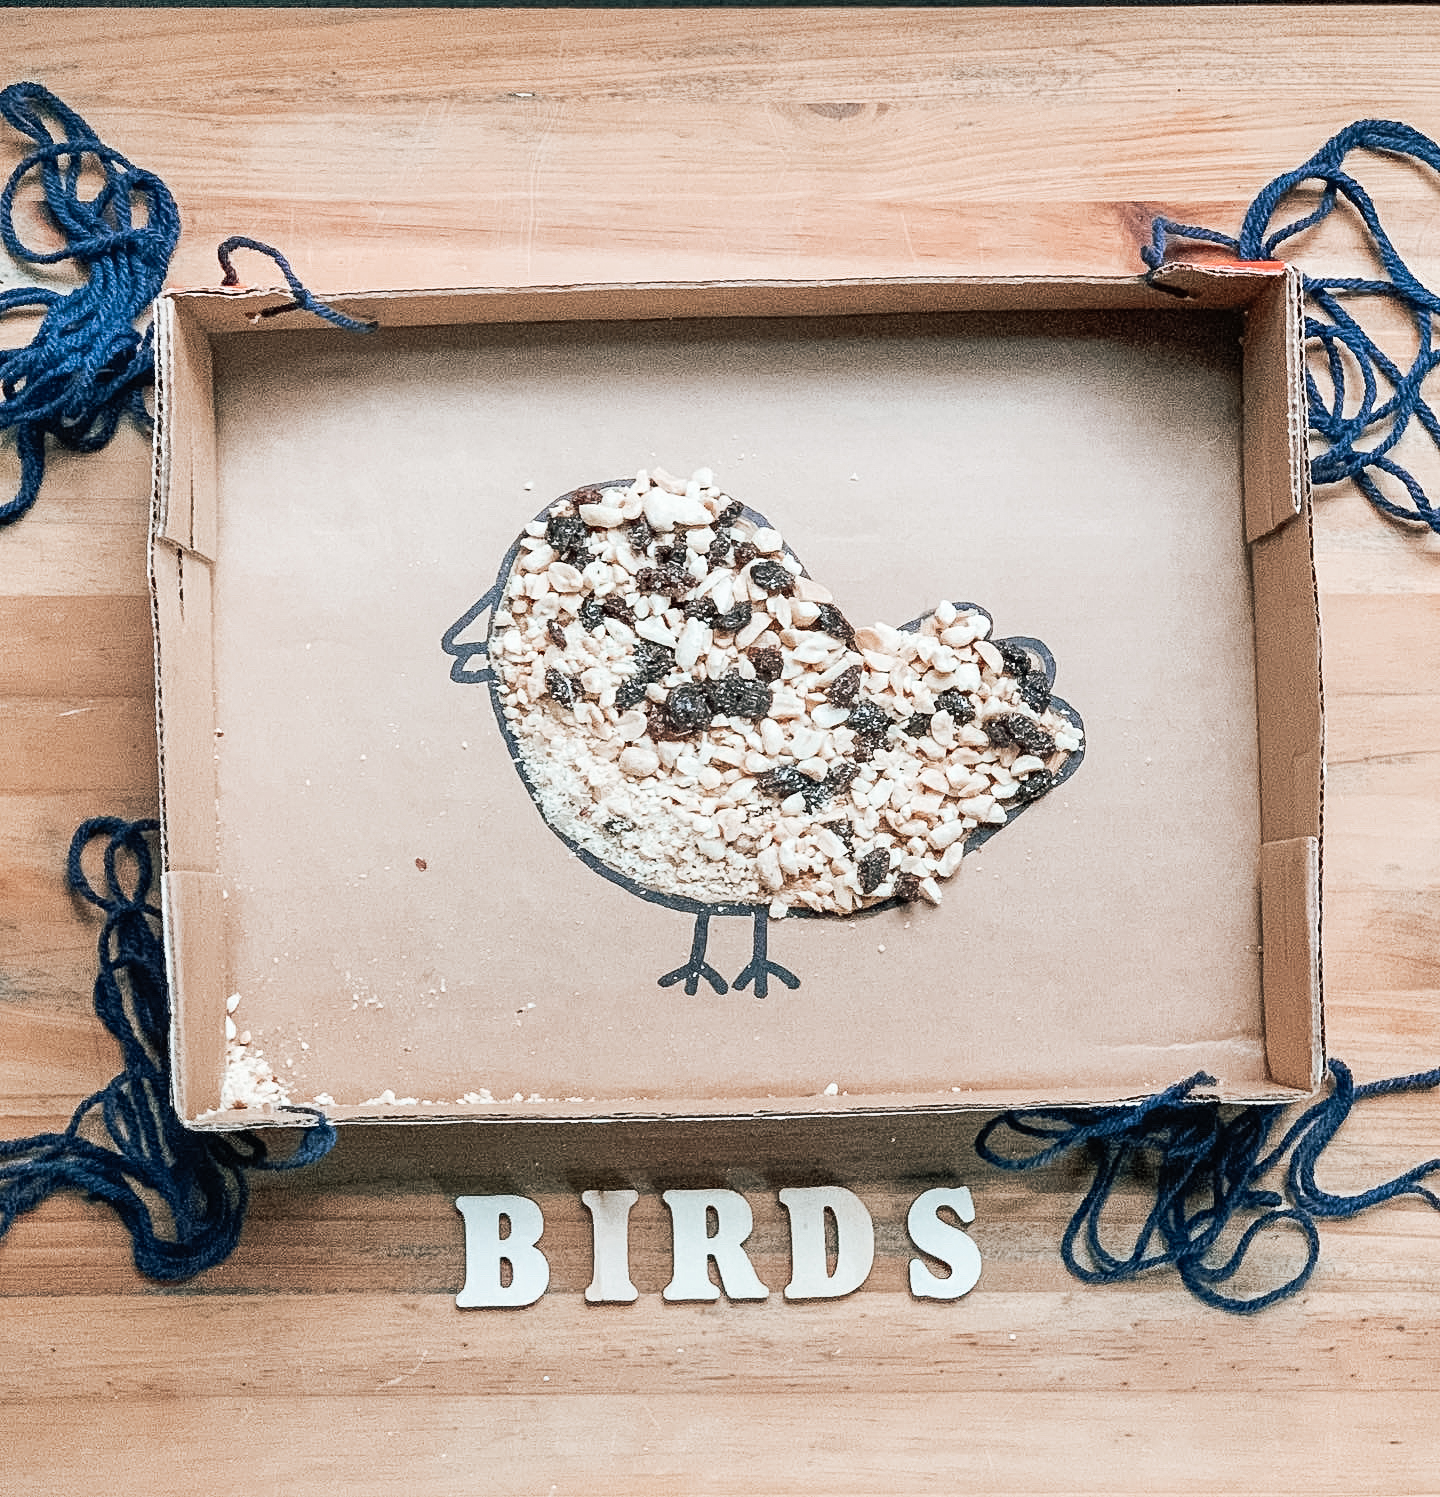 Cardboard box DIY bird feeder